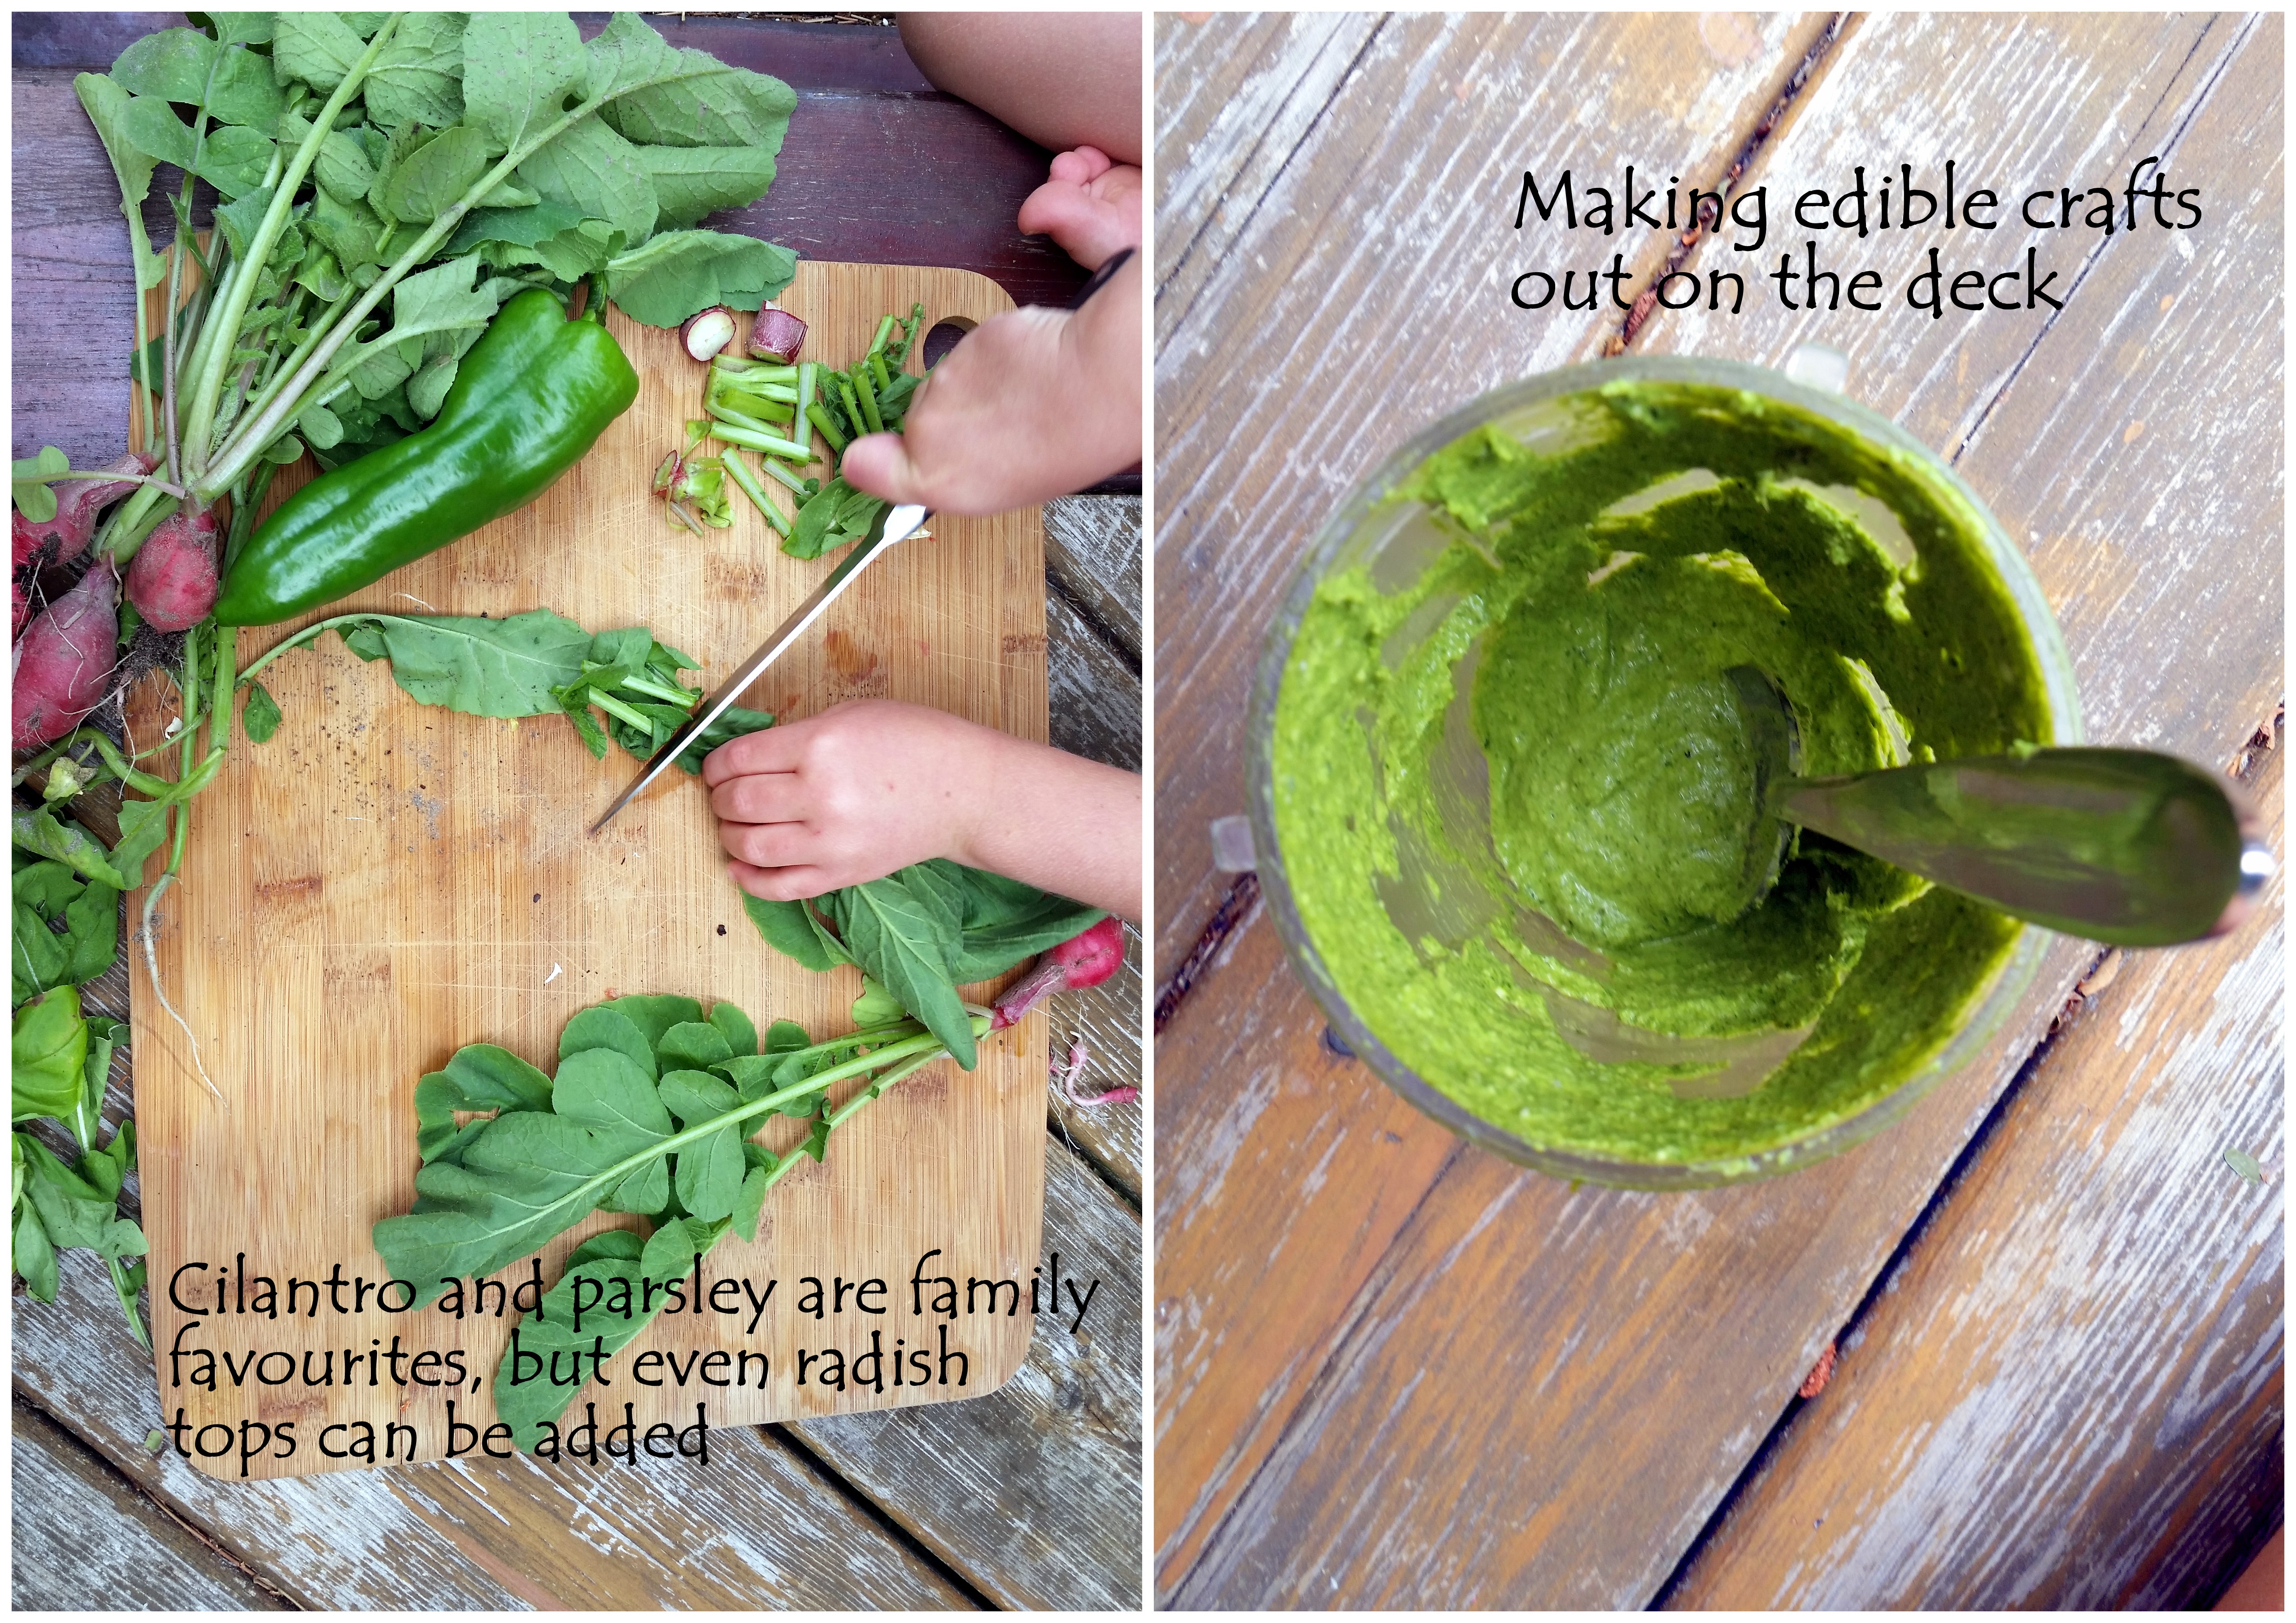 greens cilantro hemp seeds garden kids cooking recipe loven life healthy eating edible crafts